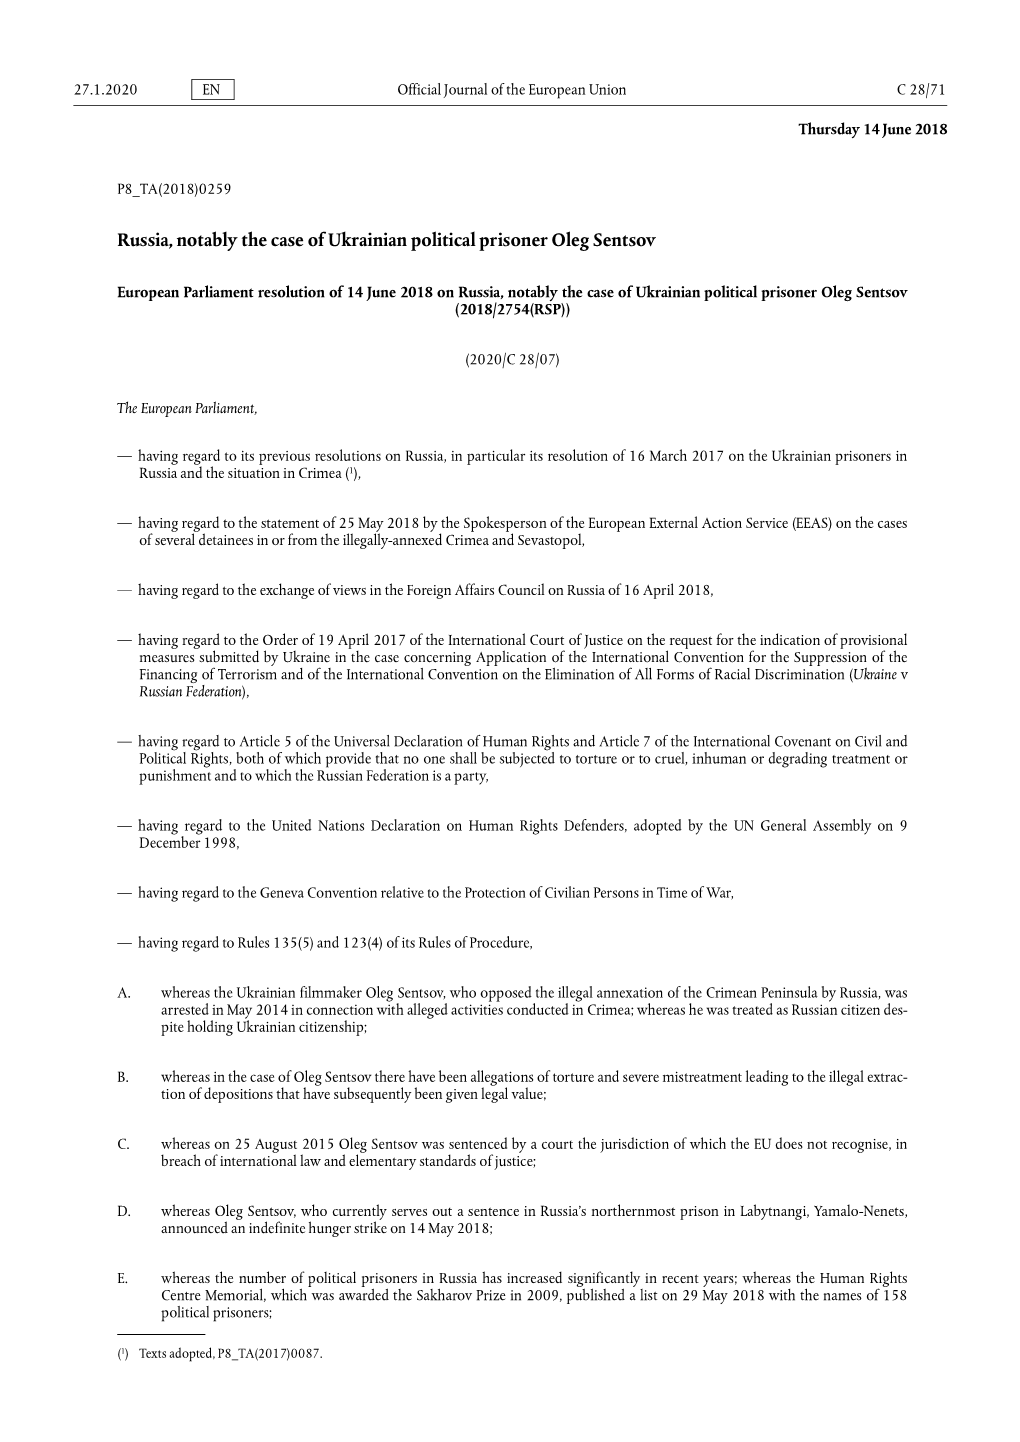 European Parliament Resolution of 14 June 2018 on Russia, Notably the Case of Ukrainian Political Prisoner Oleg Sentsov (2018/2754(RSP))